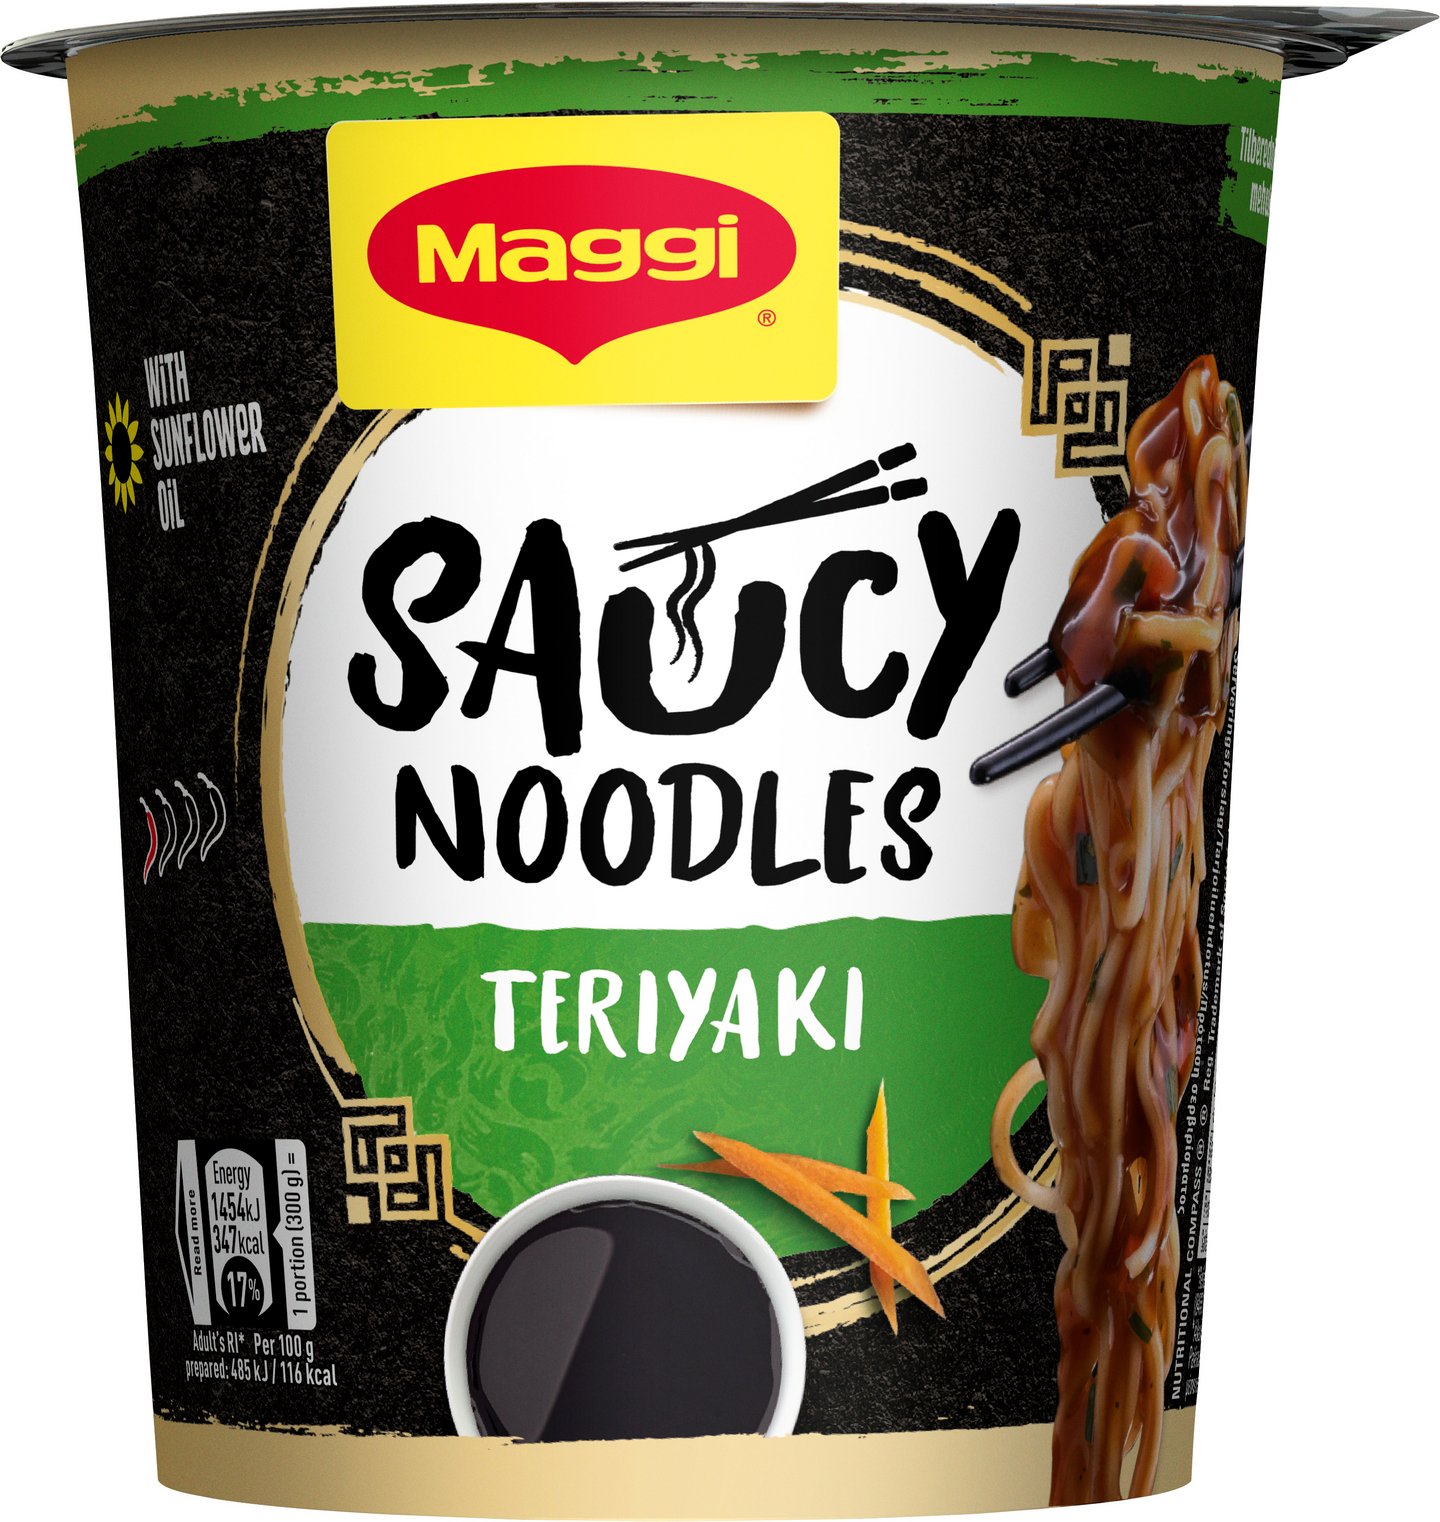 Maggi Saucy Noodles 75g Teriyaki nuudeliateria